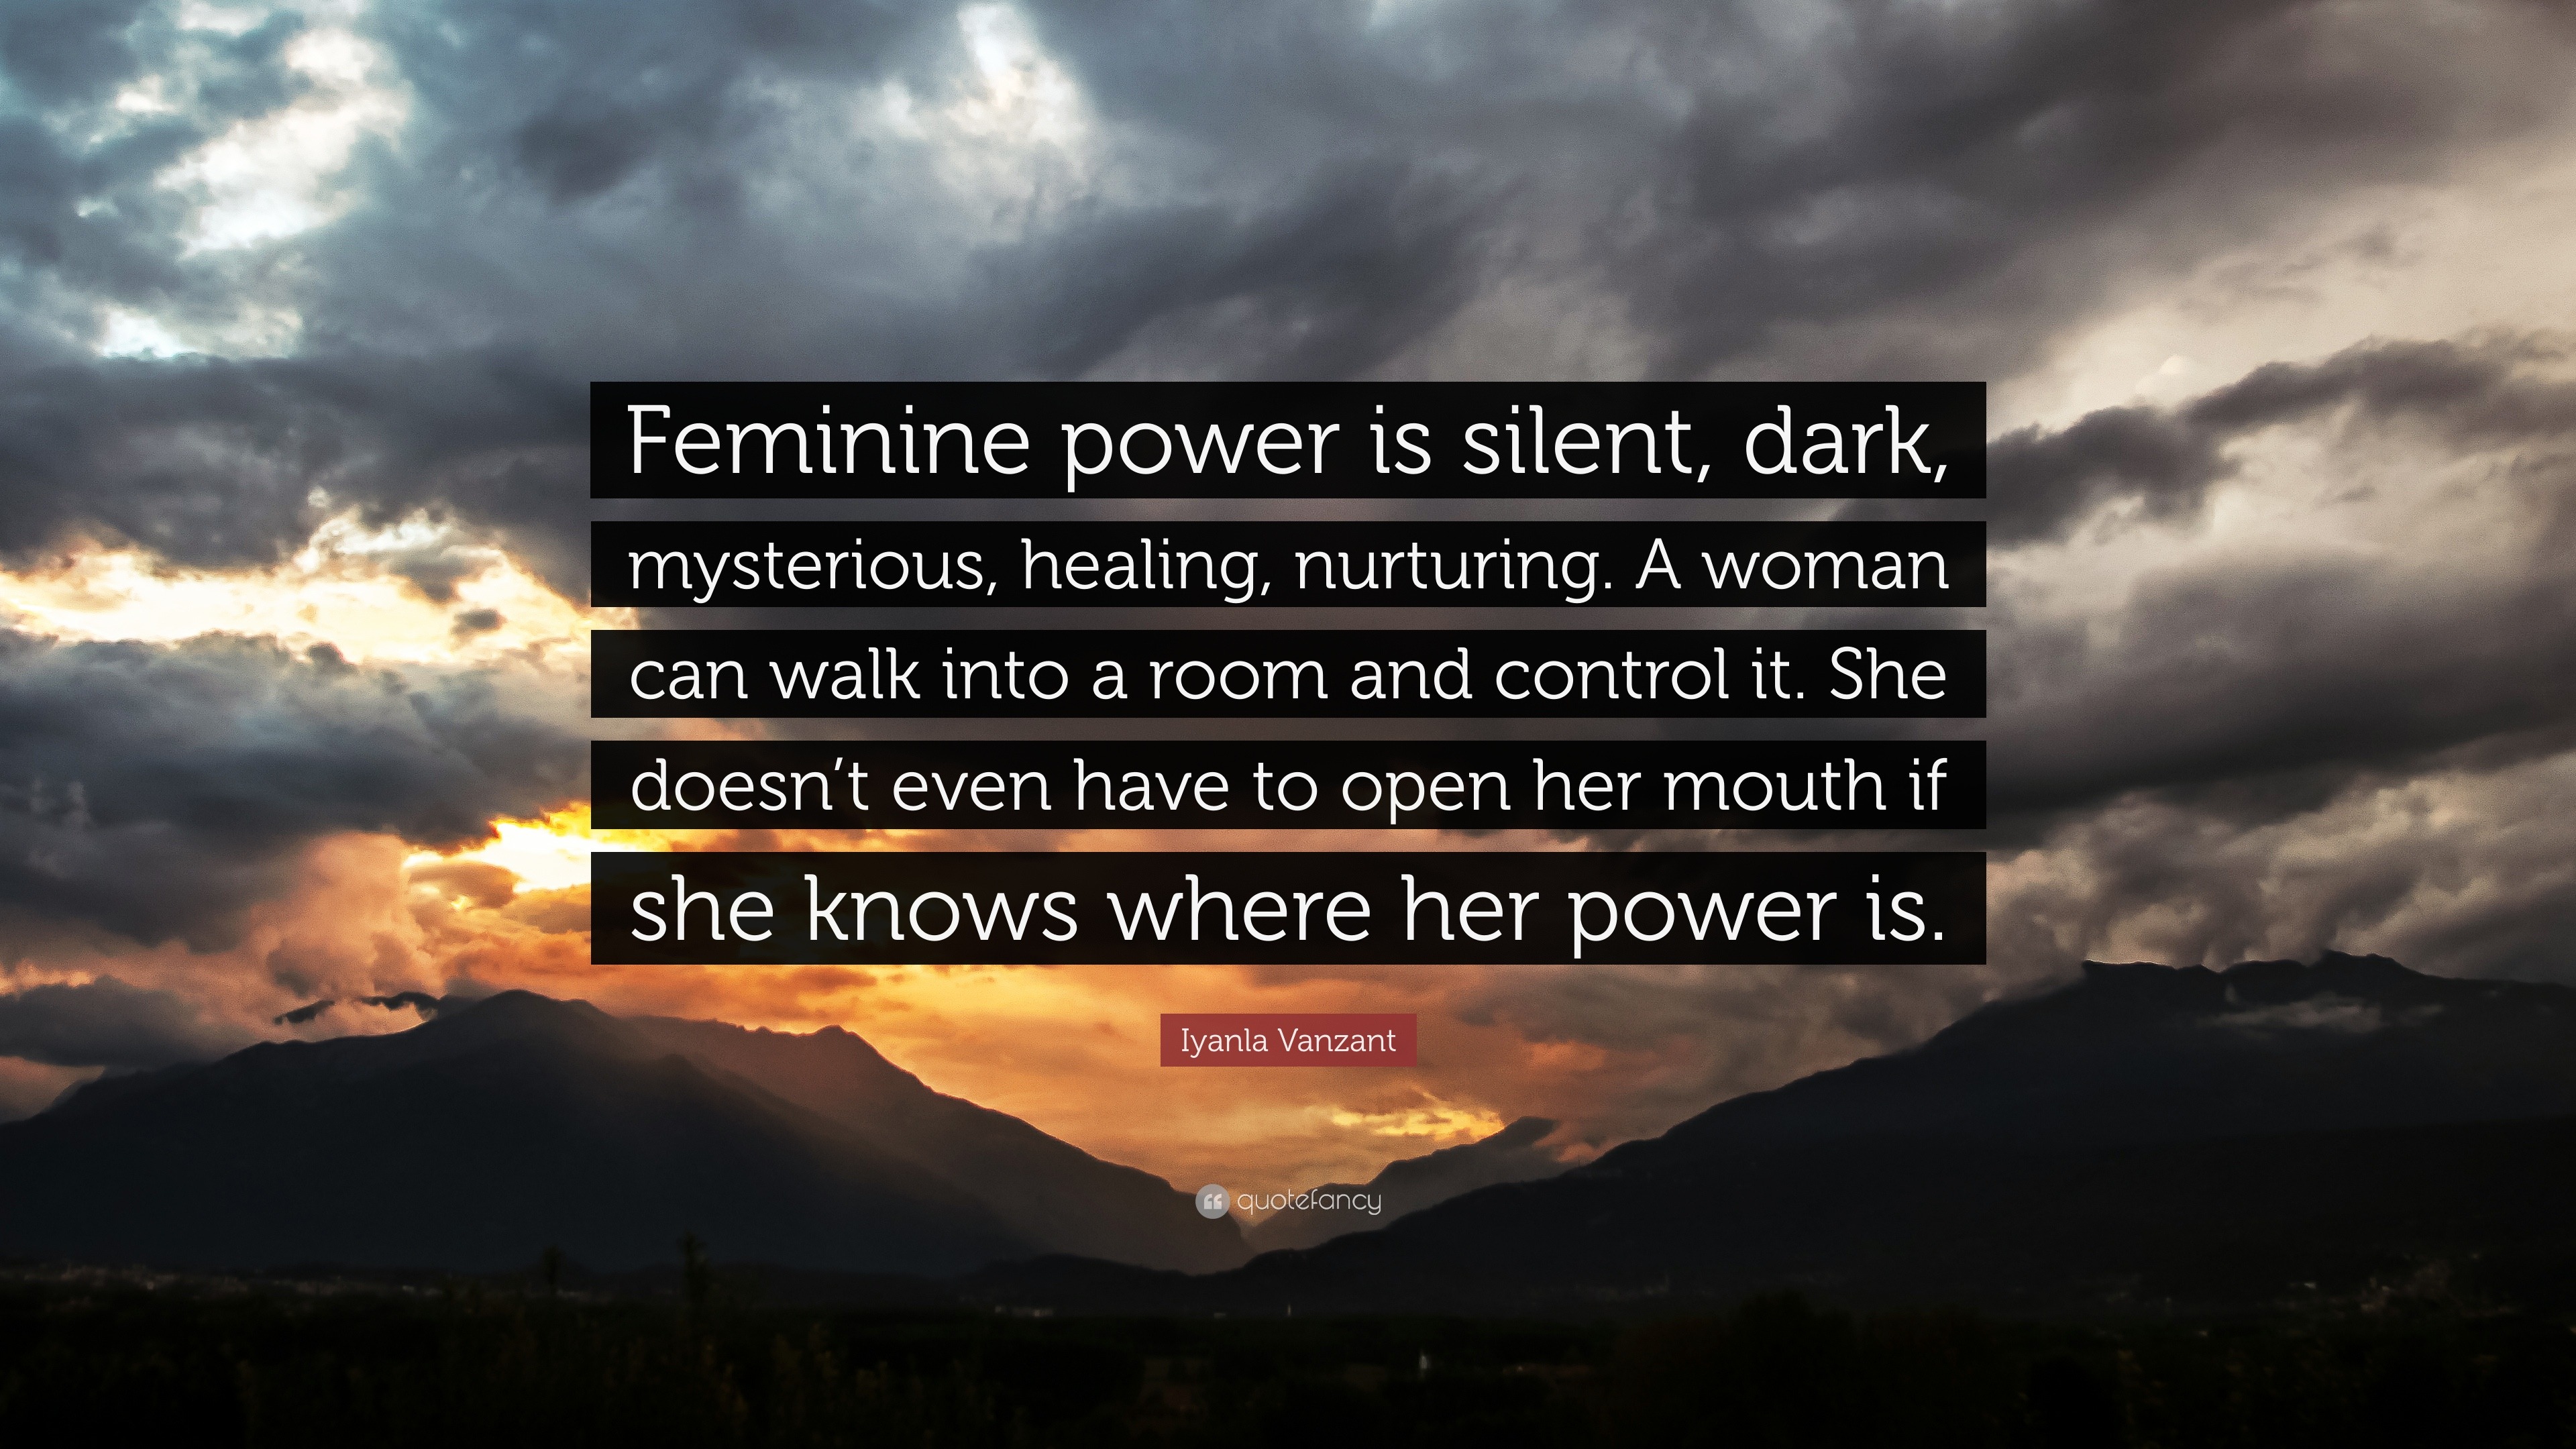 Iyanla Vanzant Quote: “Feminine power is silent, dark, mysterious